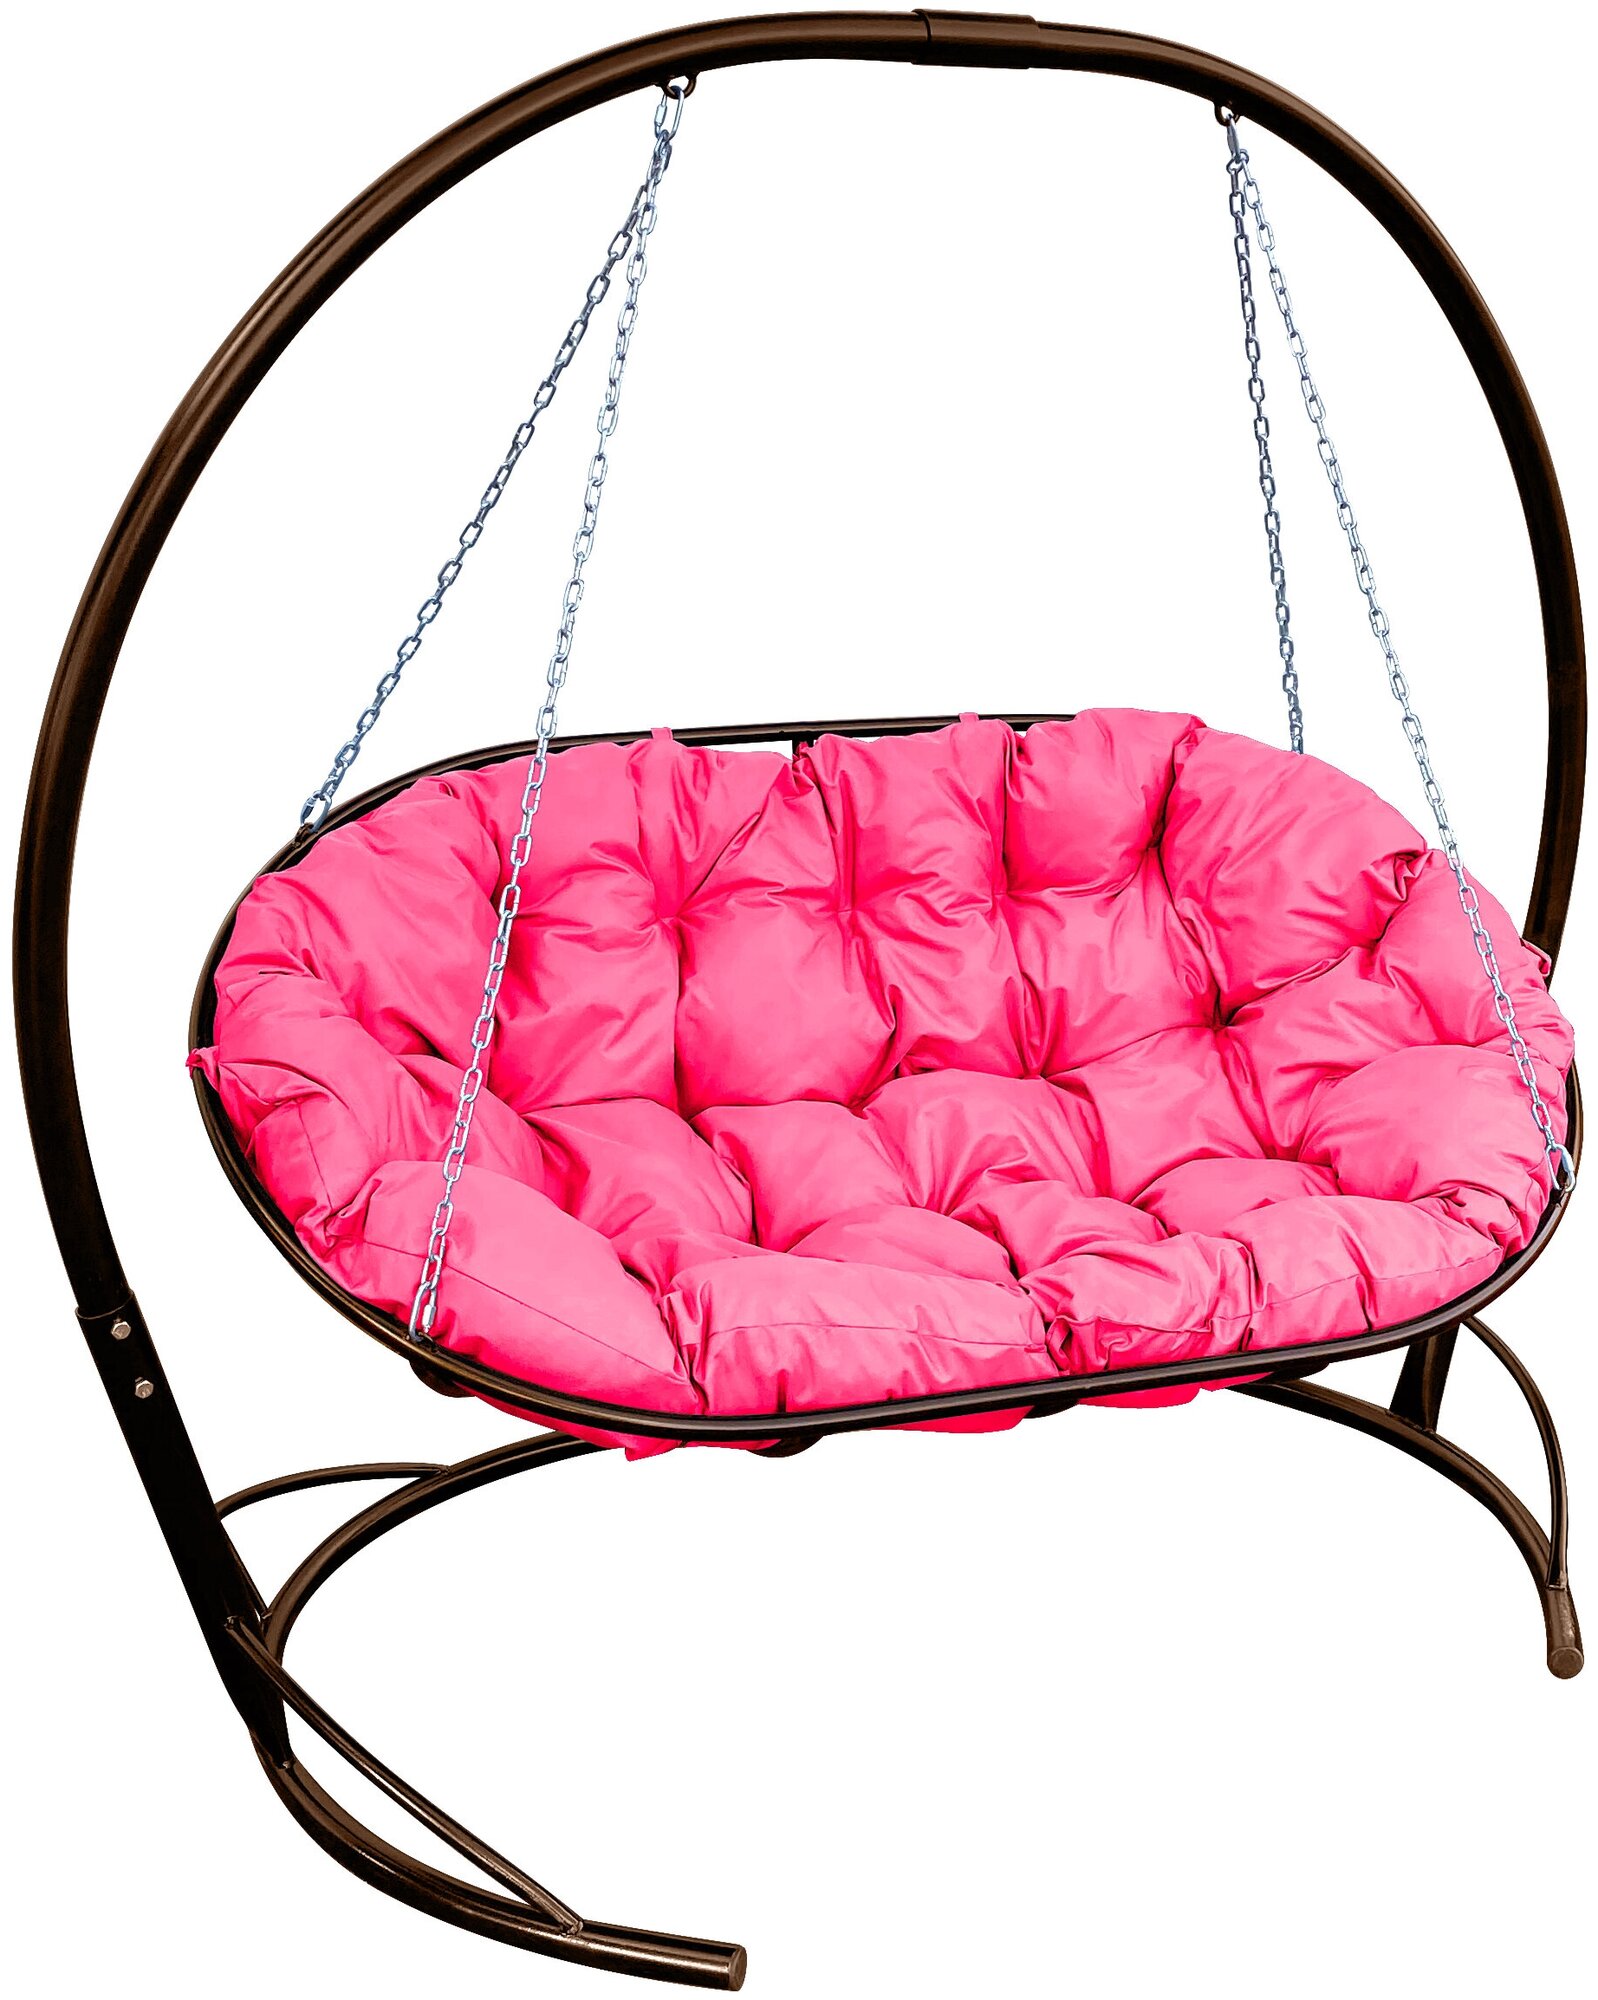 Диван m-group мамасан подвесной коричневый, розовая подушка